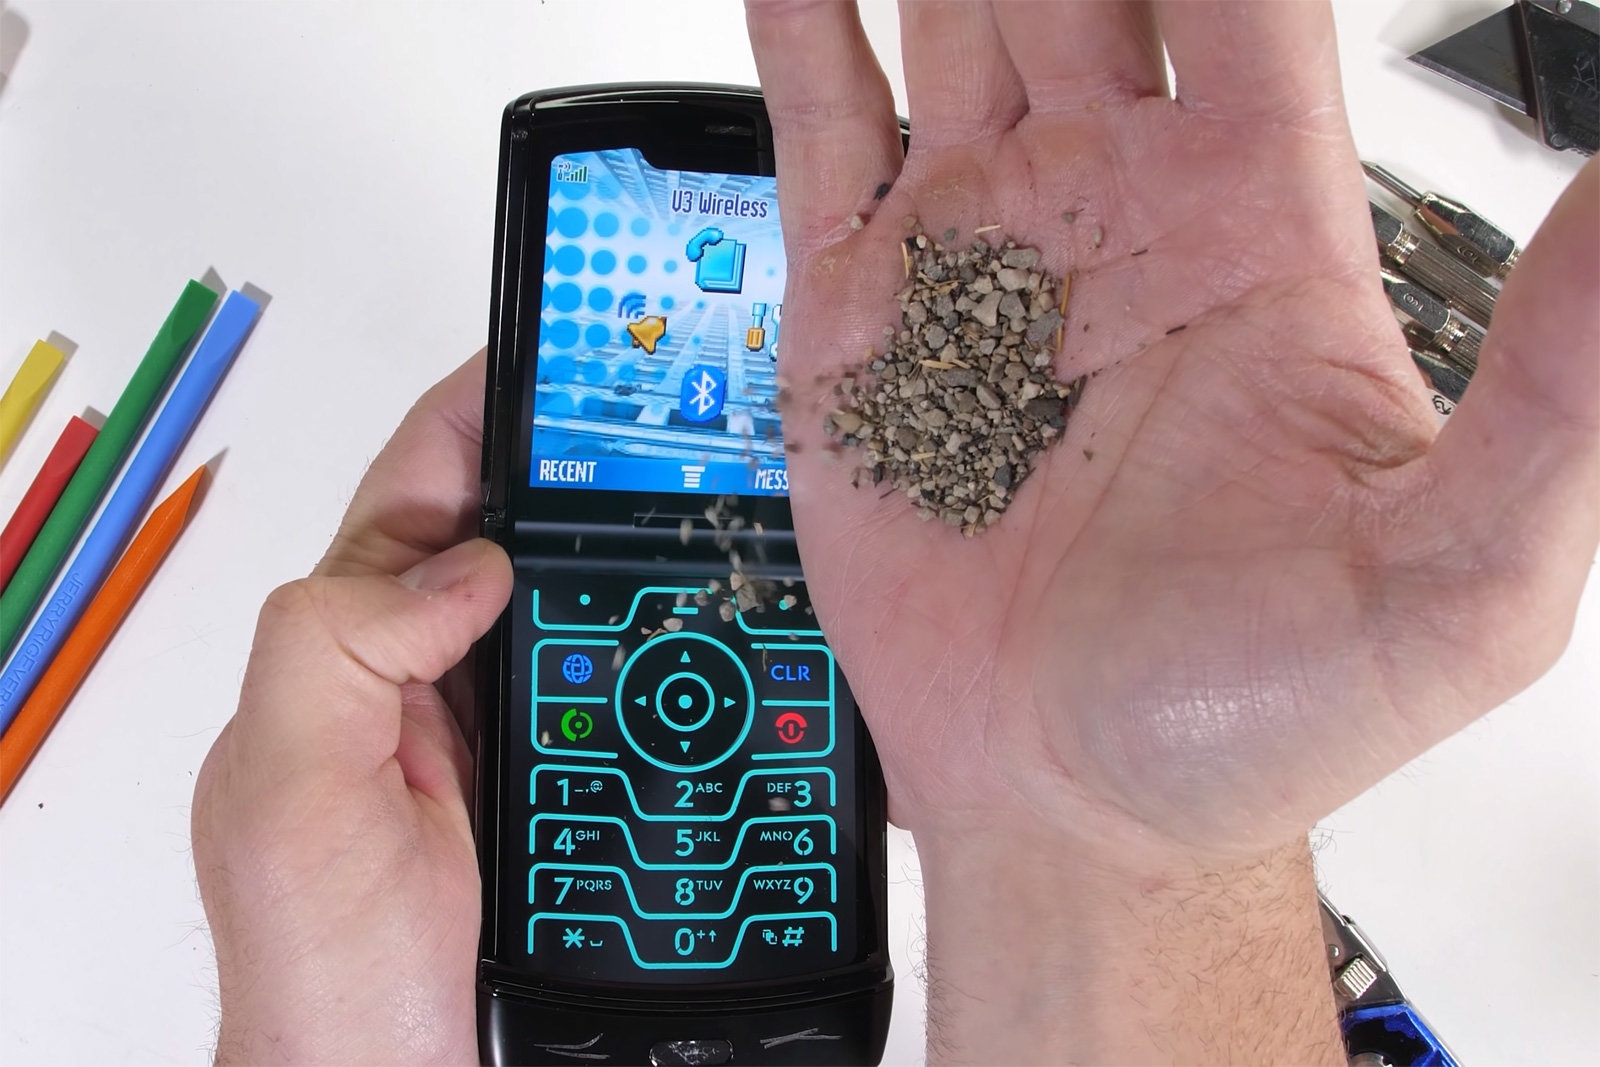 Moto Razr test gauges the phone's ability to survive 'pocket sand' | DeviceDaily.com